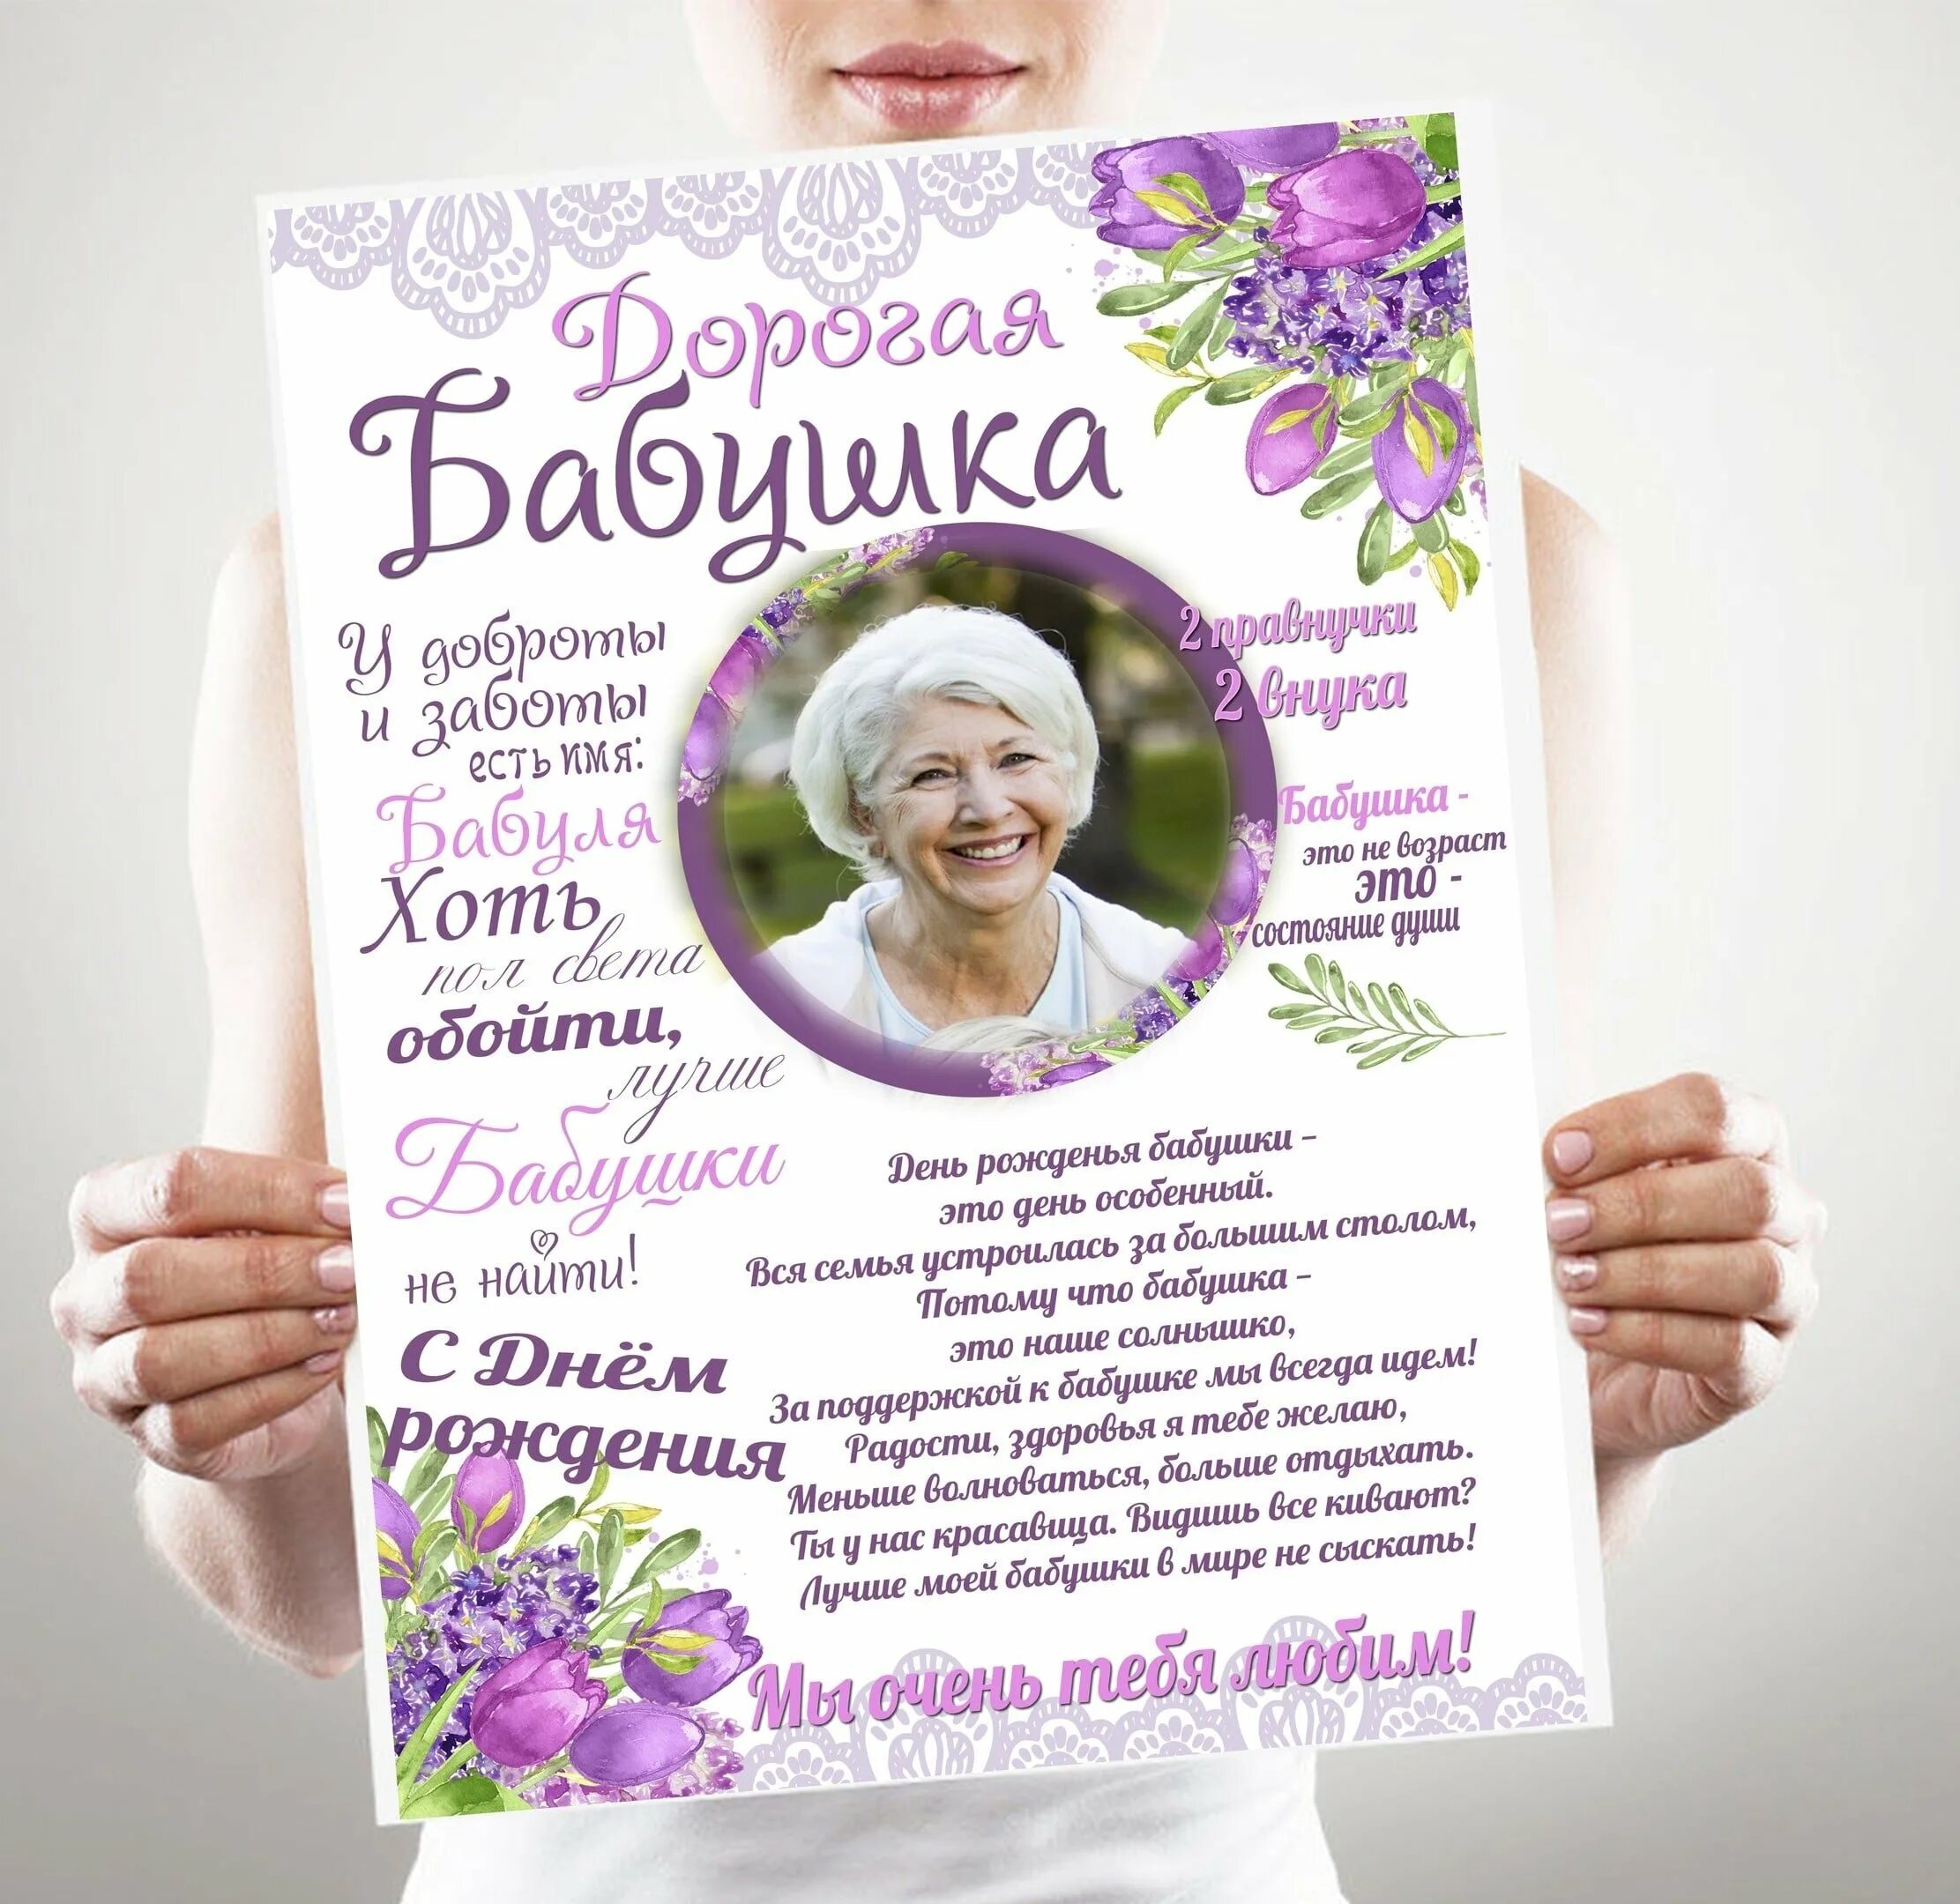 Про бабушку на день матери. Постер для бабушки. Постер для мамы и бабушки. Постер для бабушки на день рождения. Метрика для бабушки на день рождения.